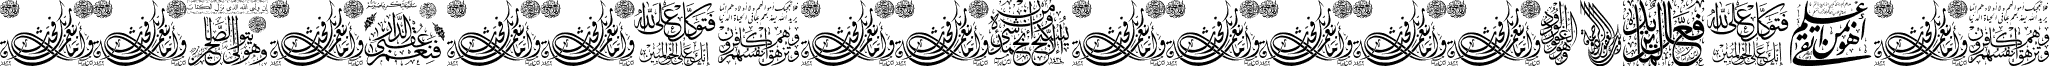 Aayat Quraan031 Regular font - Aayat_Quraan_031.ttf